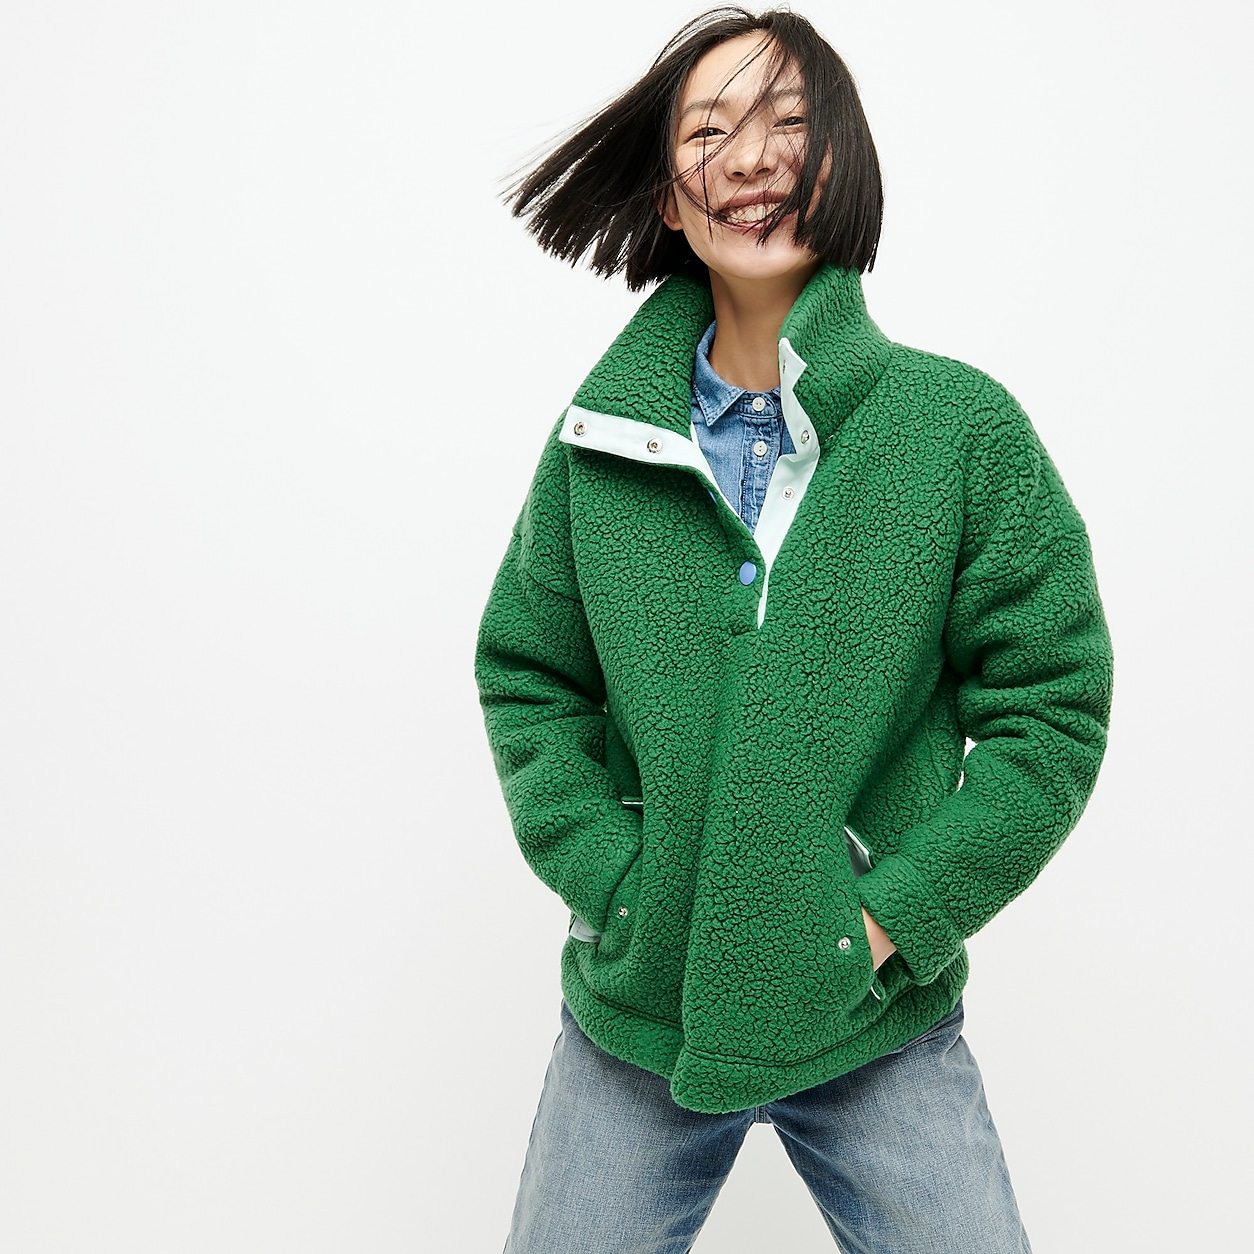 Snap collar sherpa sweatshirt in Polartec® fleece